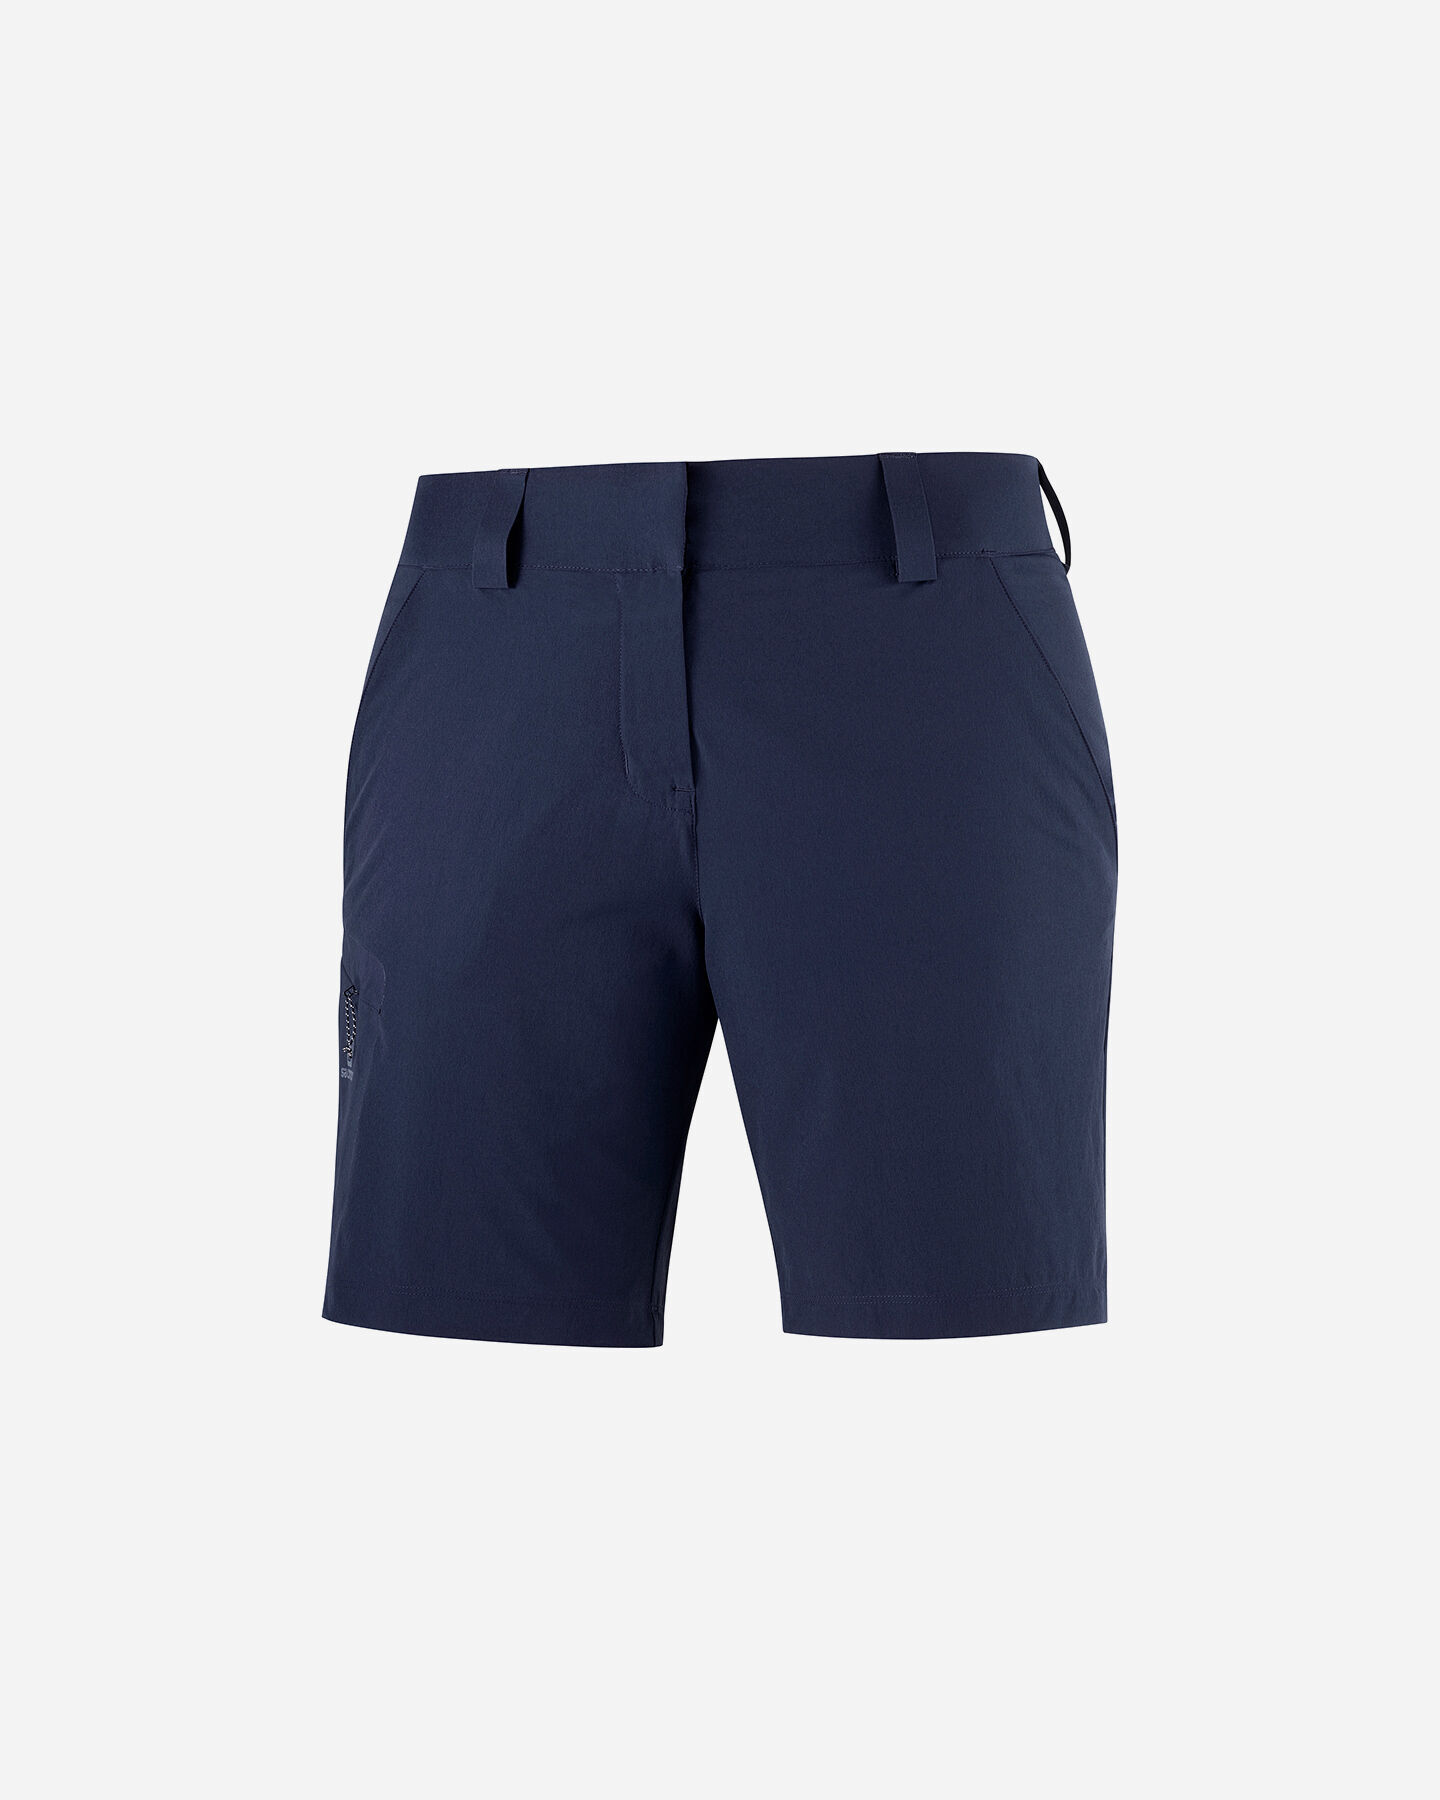  Pantalone outdoor SALOMON WAYFARER M S5288530|UNI|46 scatto 5